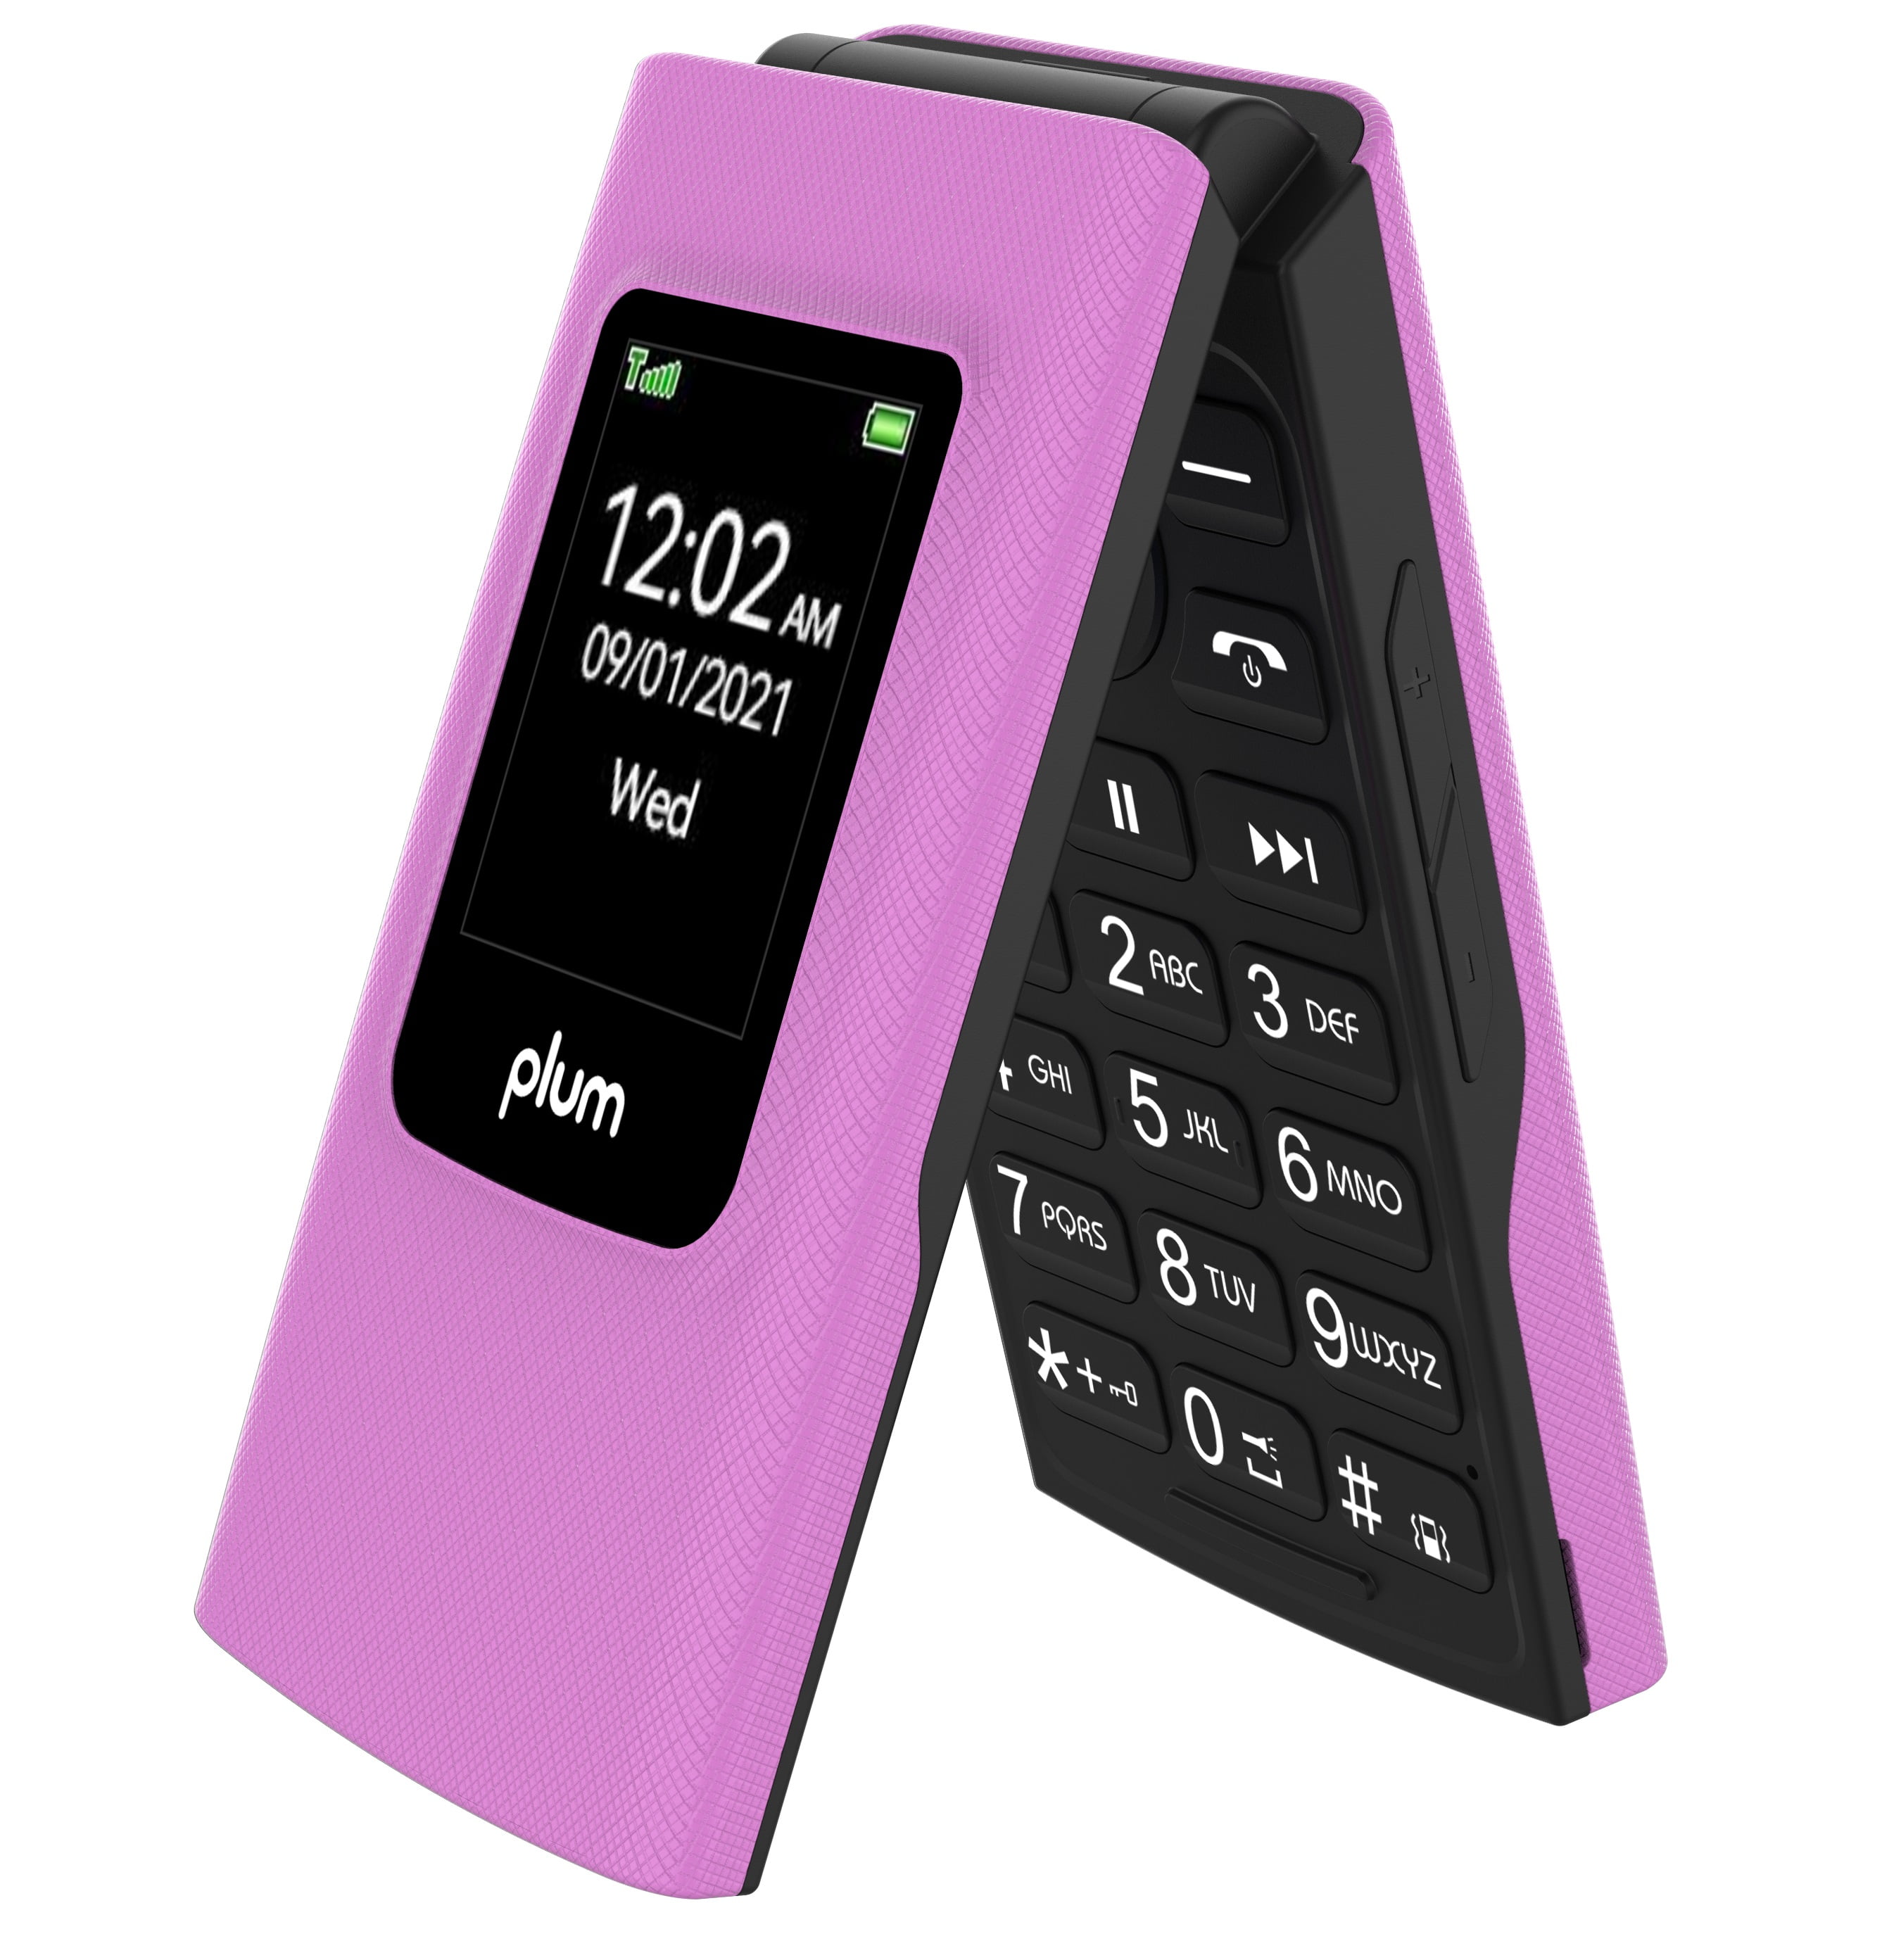 Plum FLIPPER 4G VoLTE Unlocked Flip Phone 2022 Model Includes Sim